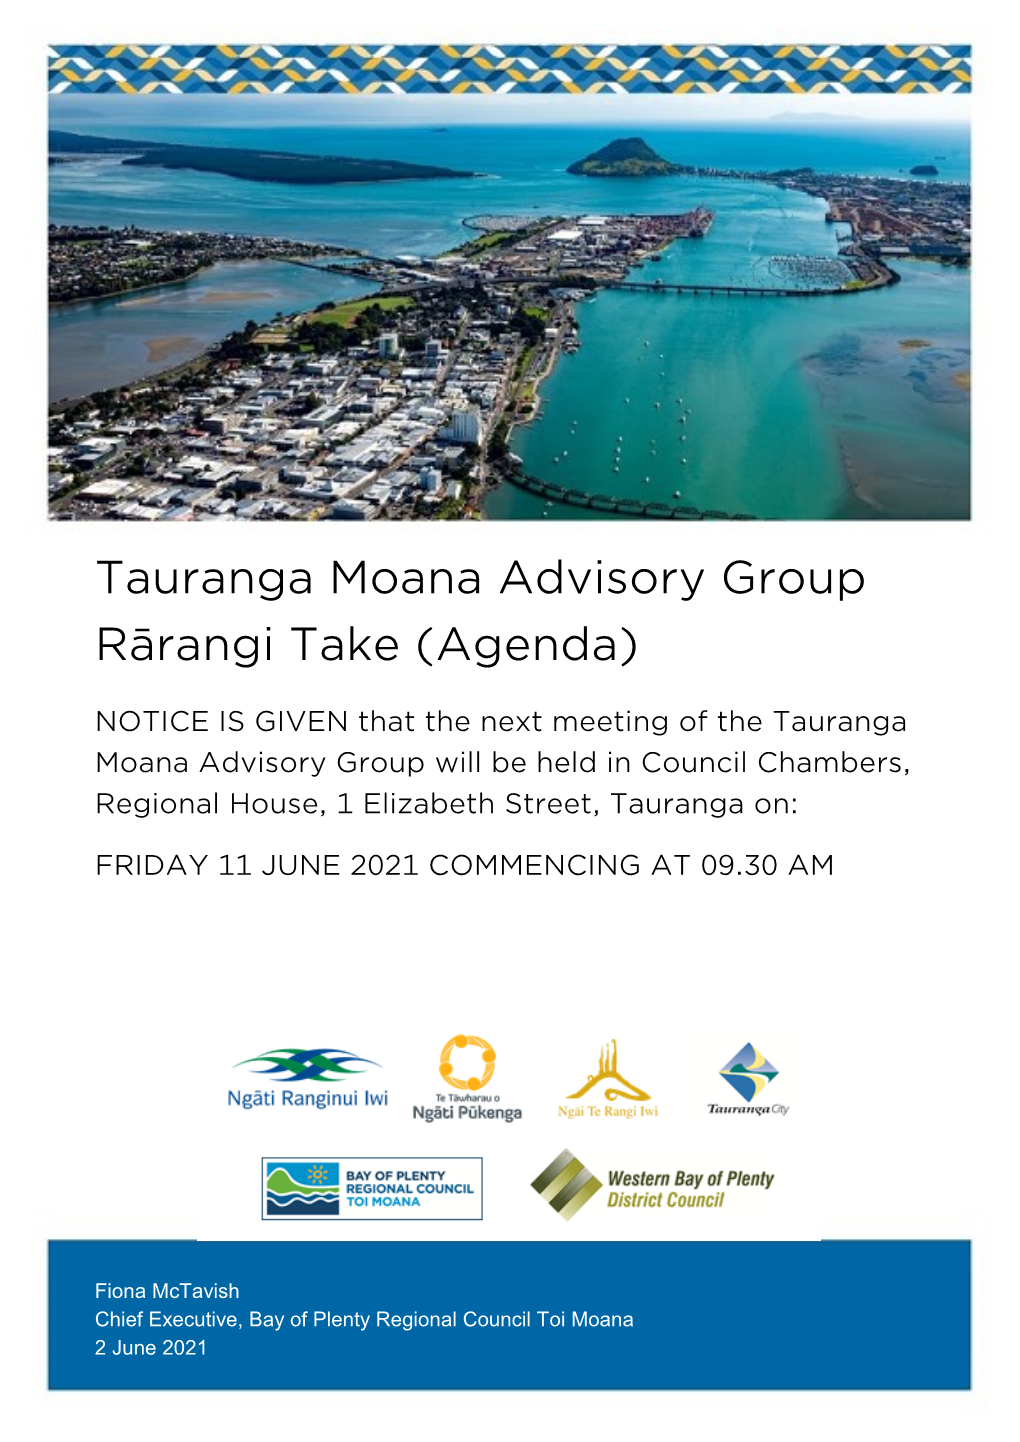 Agenda of Tauranga Moana Advisory Group